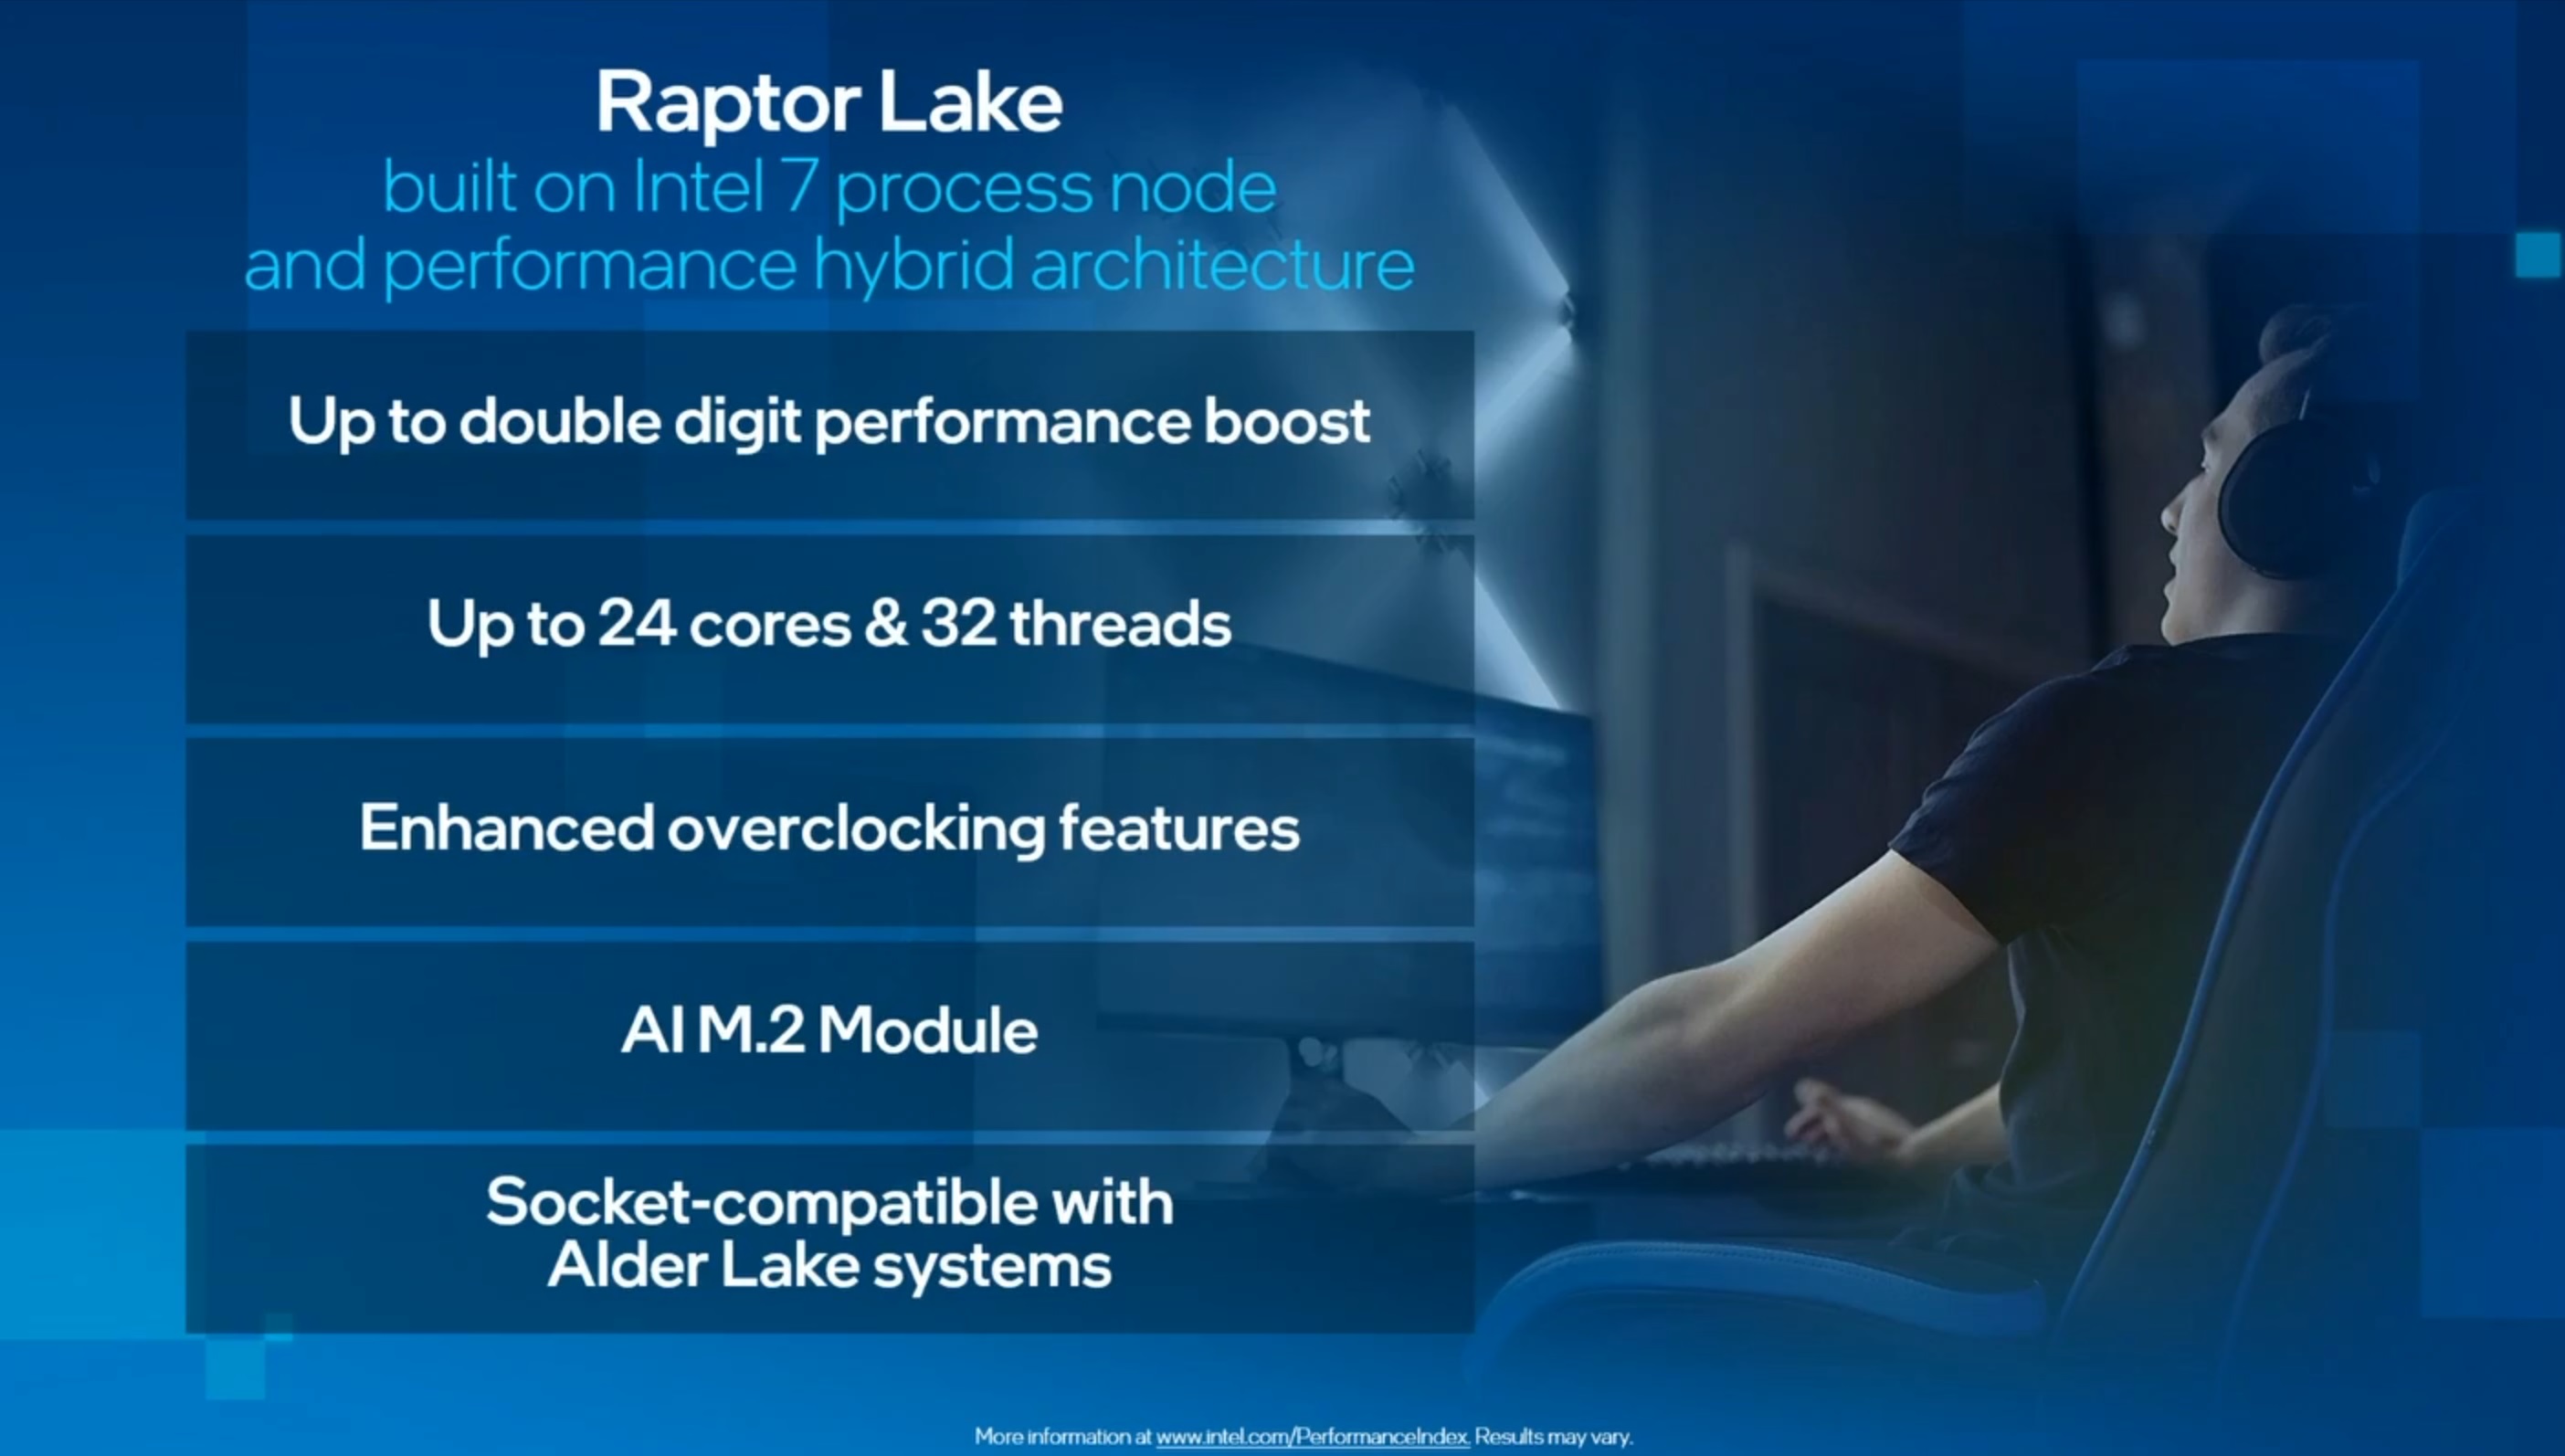 Intel's Raptor Lake presentation slide.